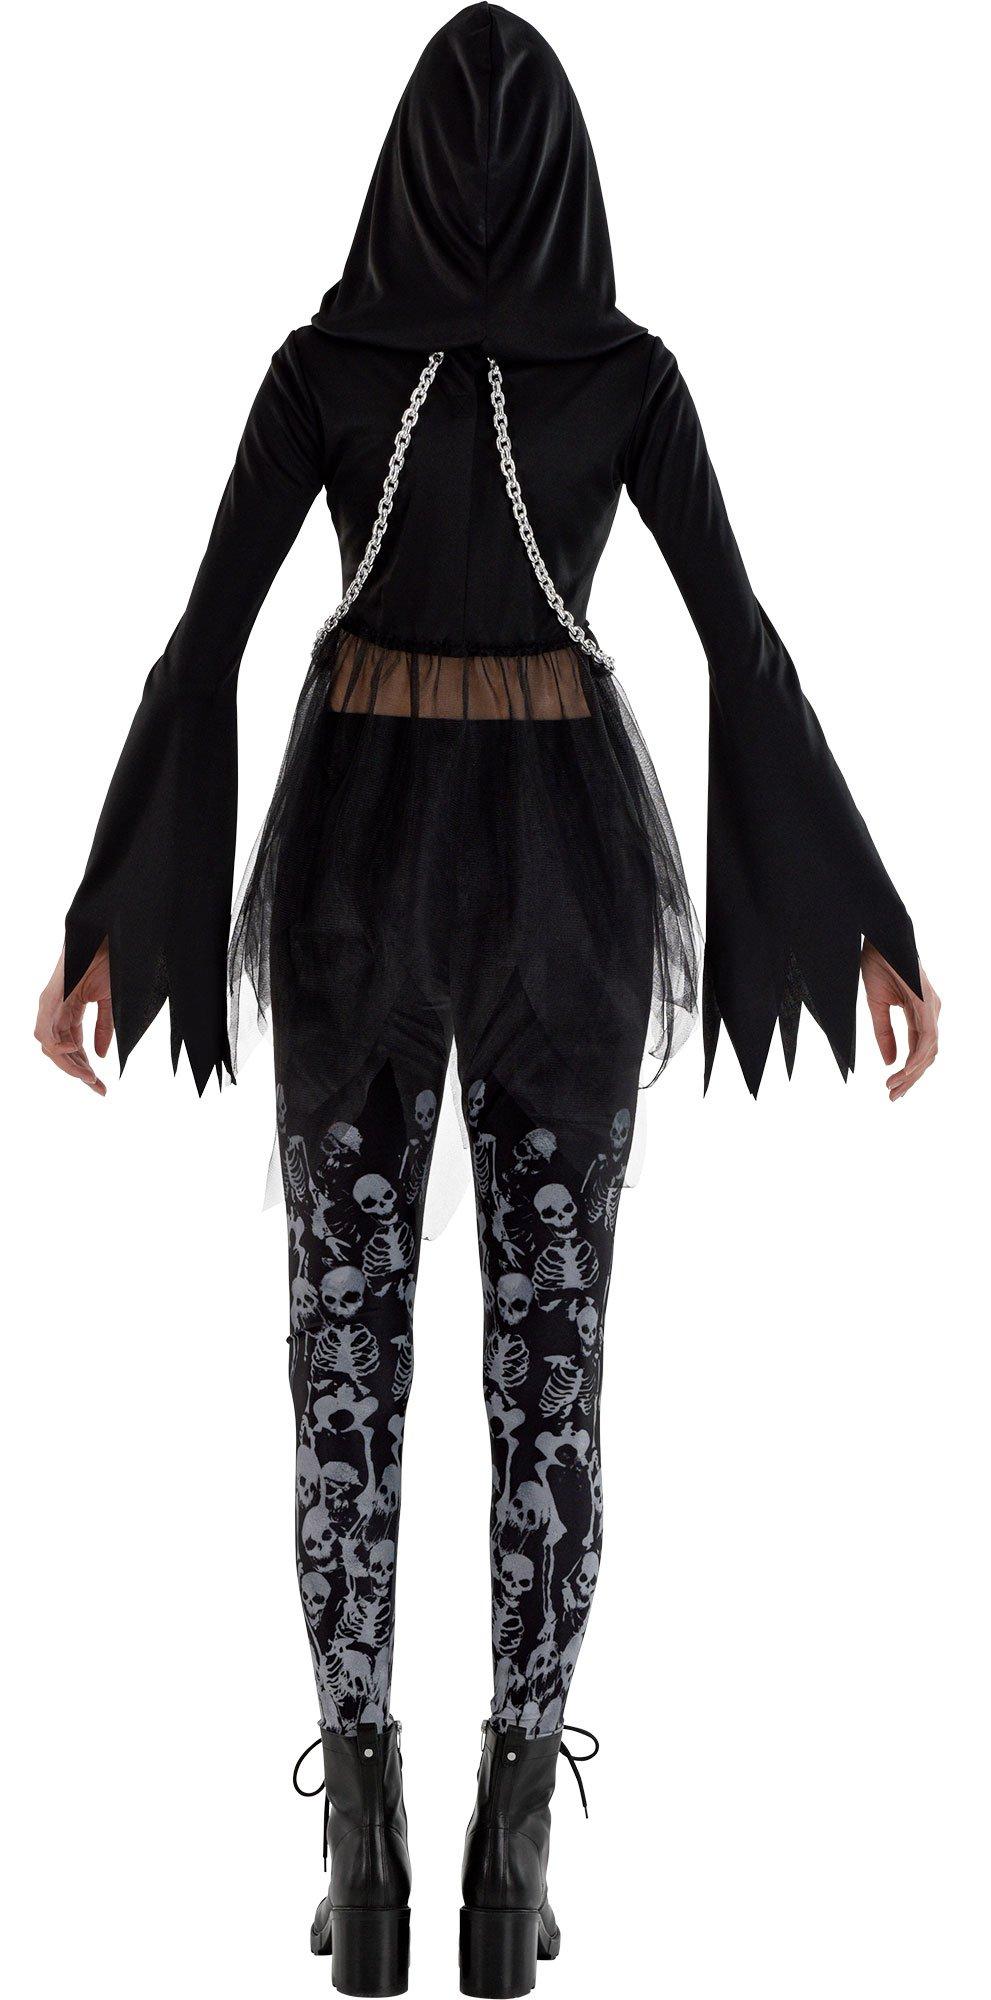 Adult Goth Reaper Costume